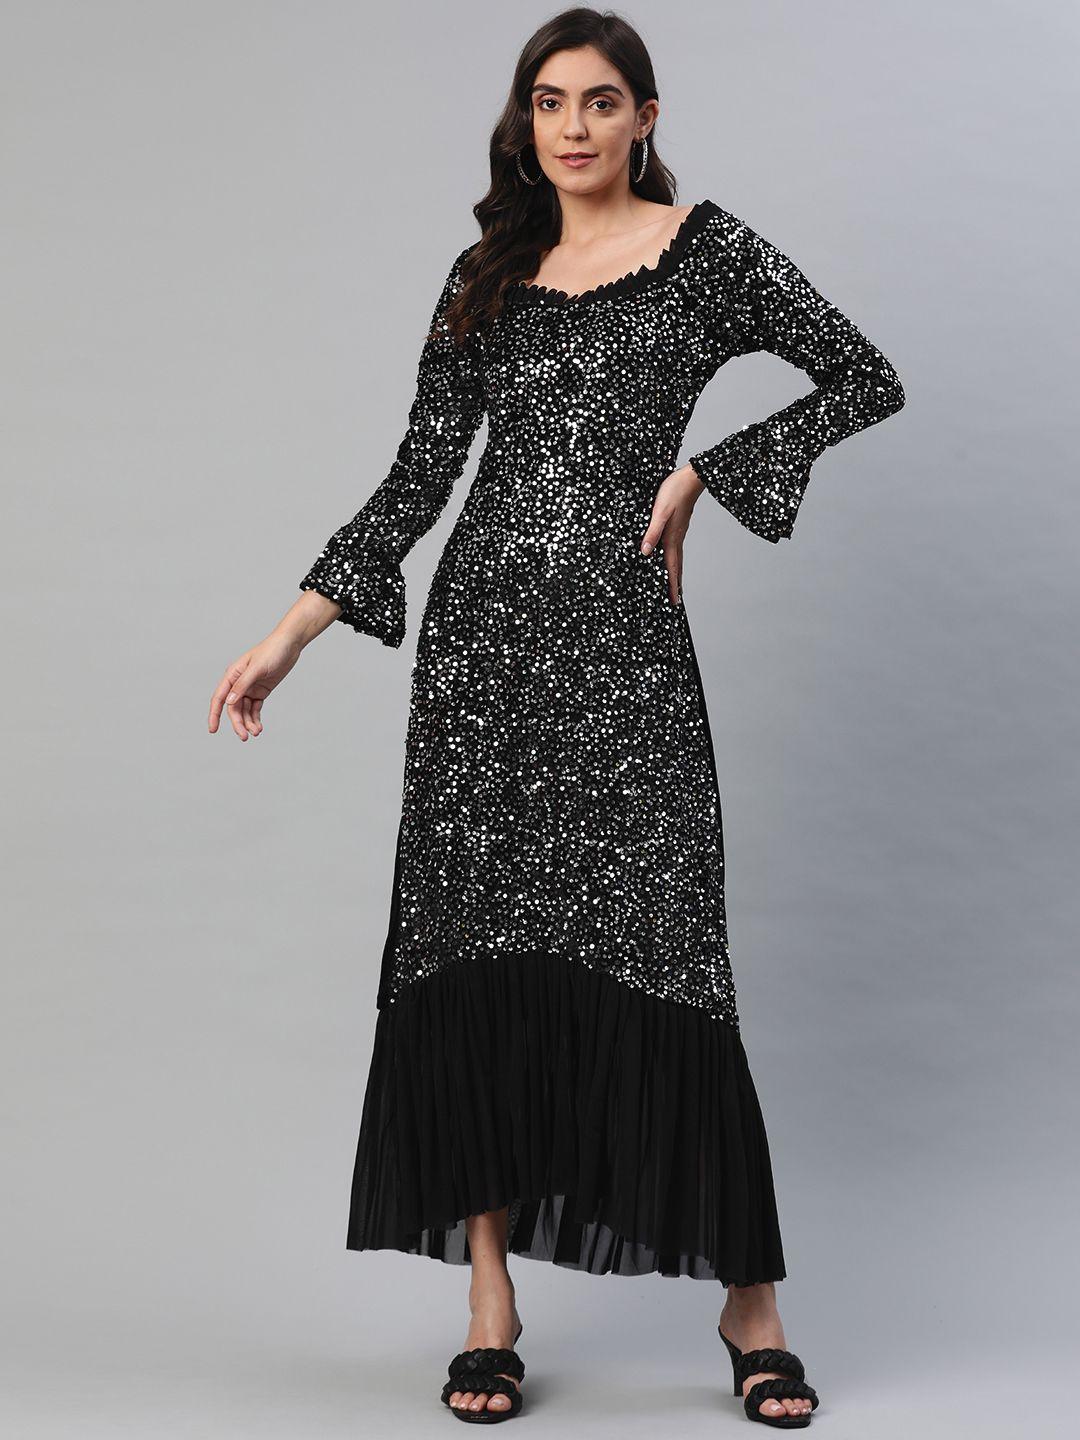 aarika-women-silver-&-black-embellished-velvet-maxi-dress